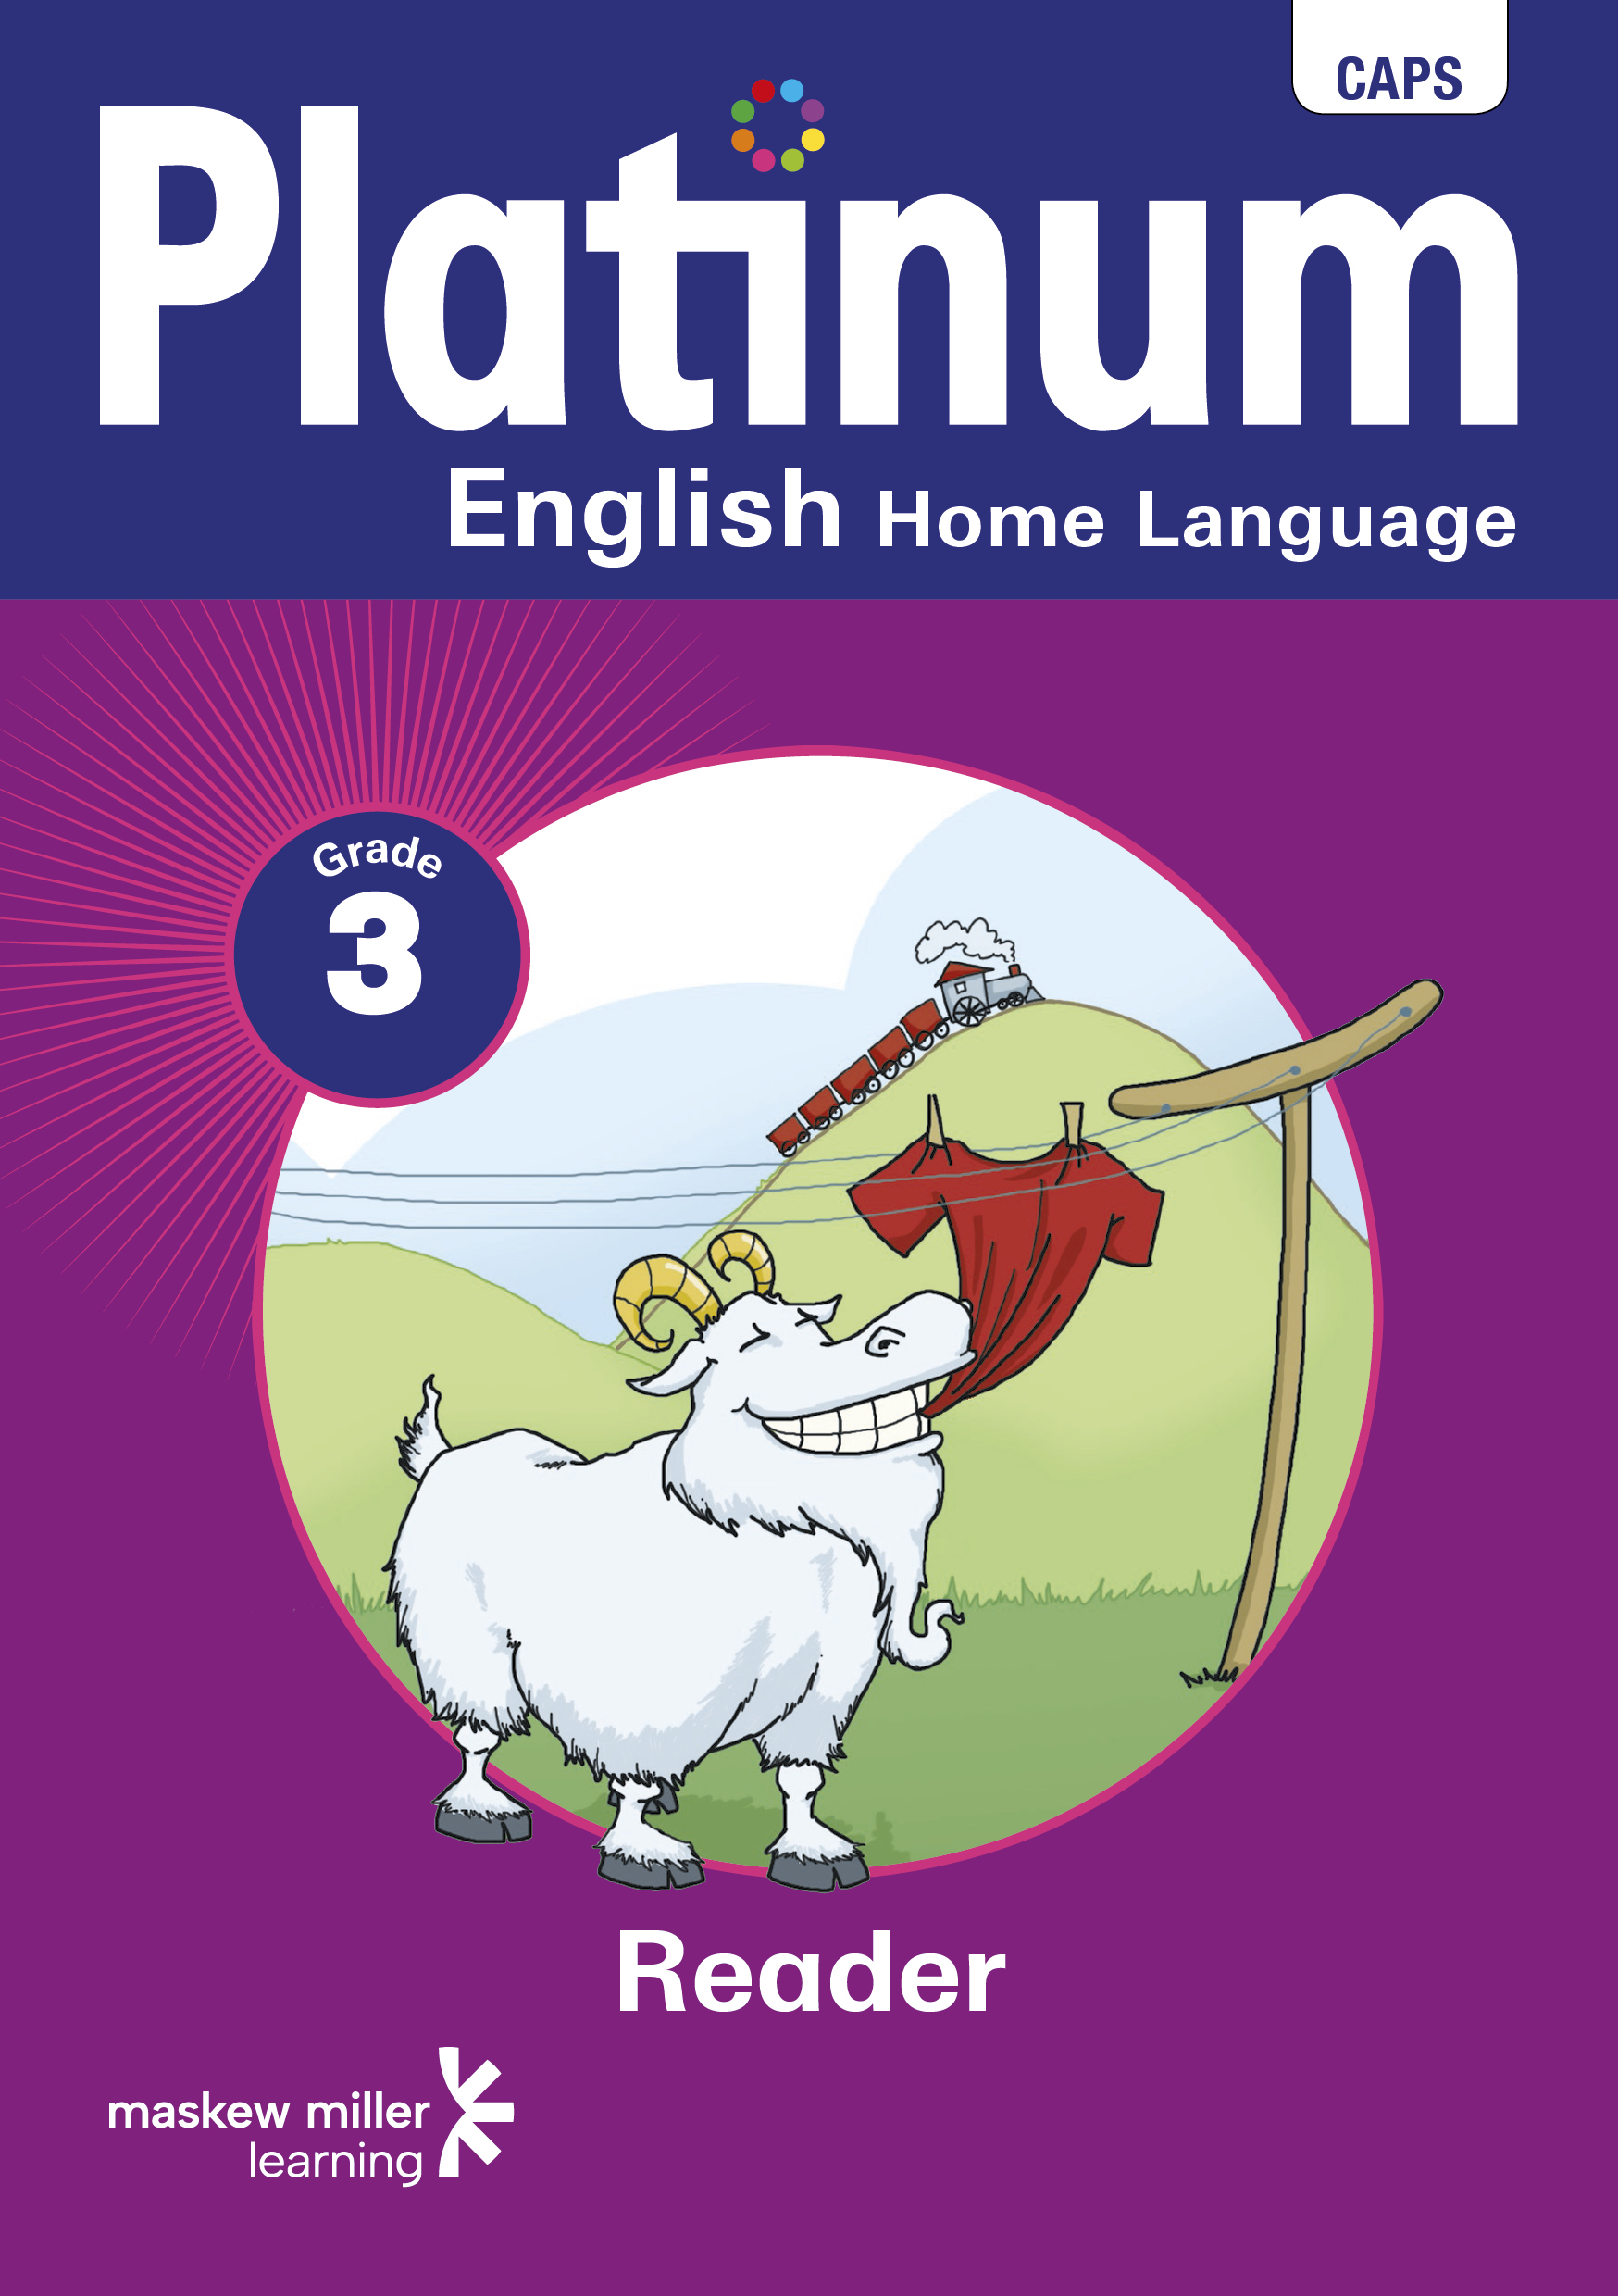 Picture of Platinum English CAPS: Platinum English home language: Grade 3: Grade 3: Reader Gr 3: Reader